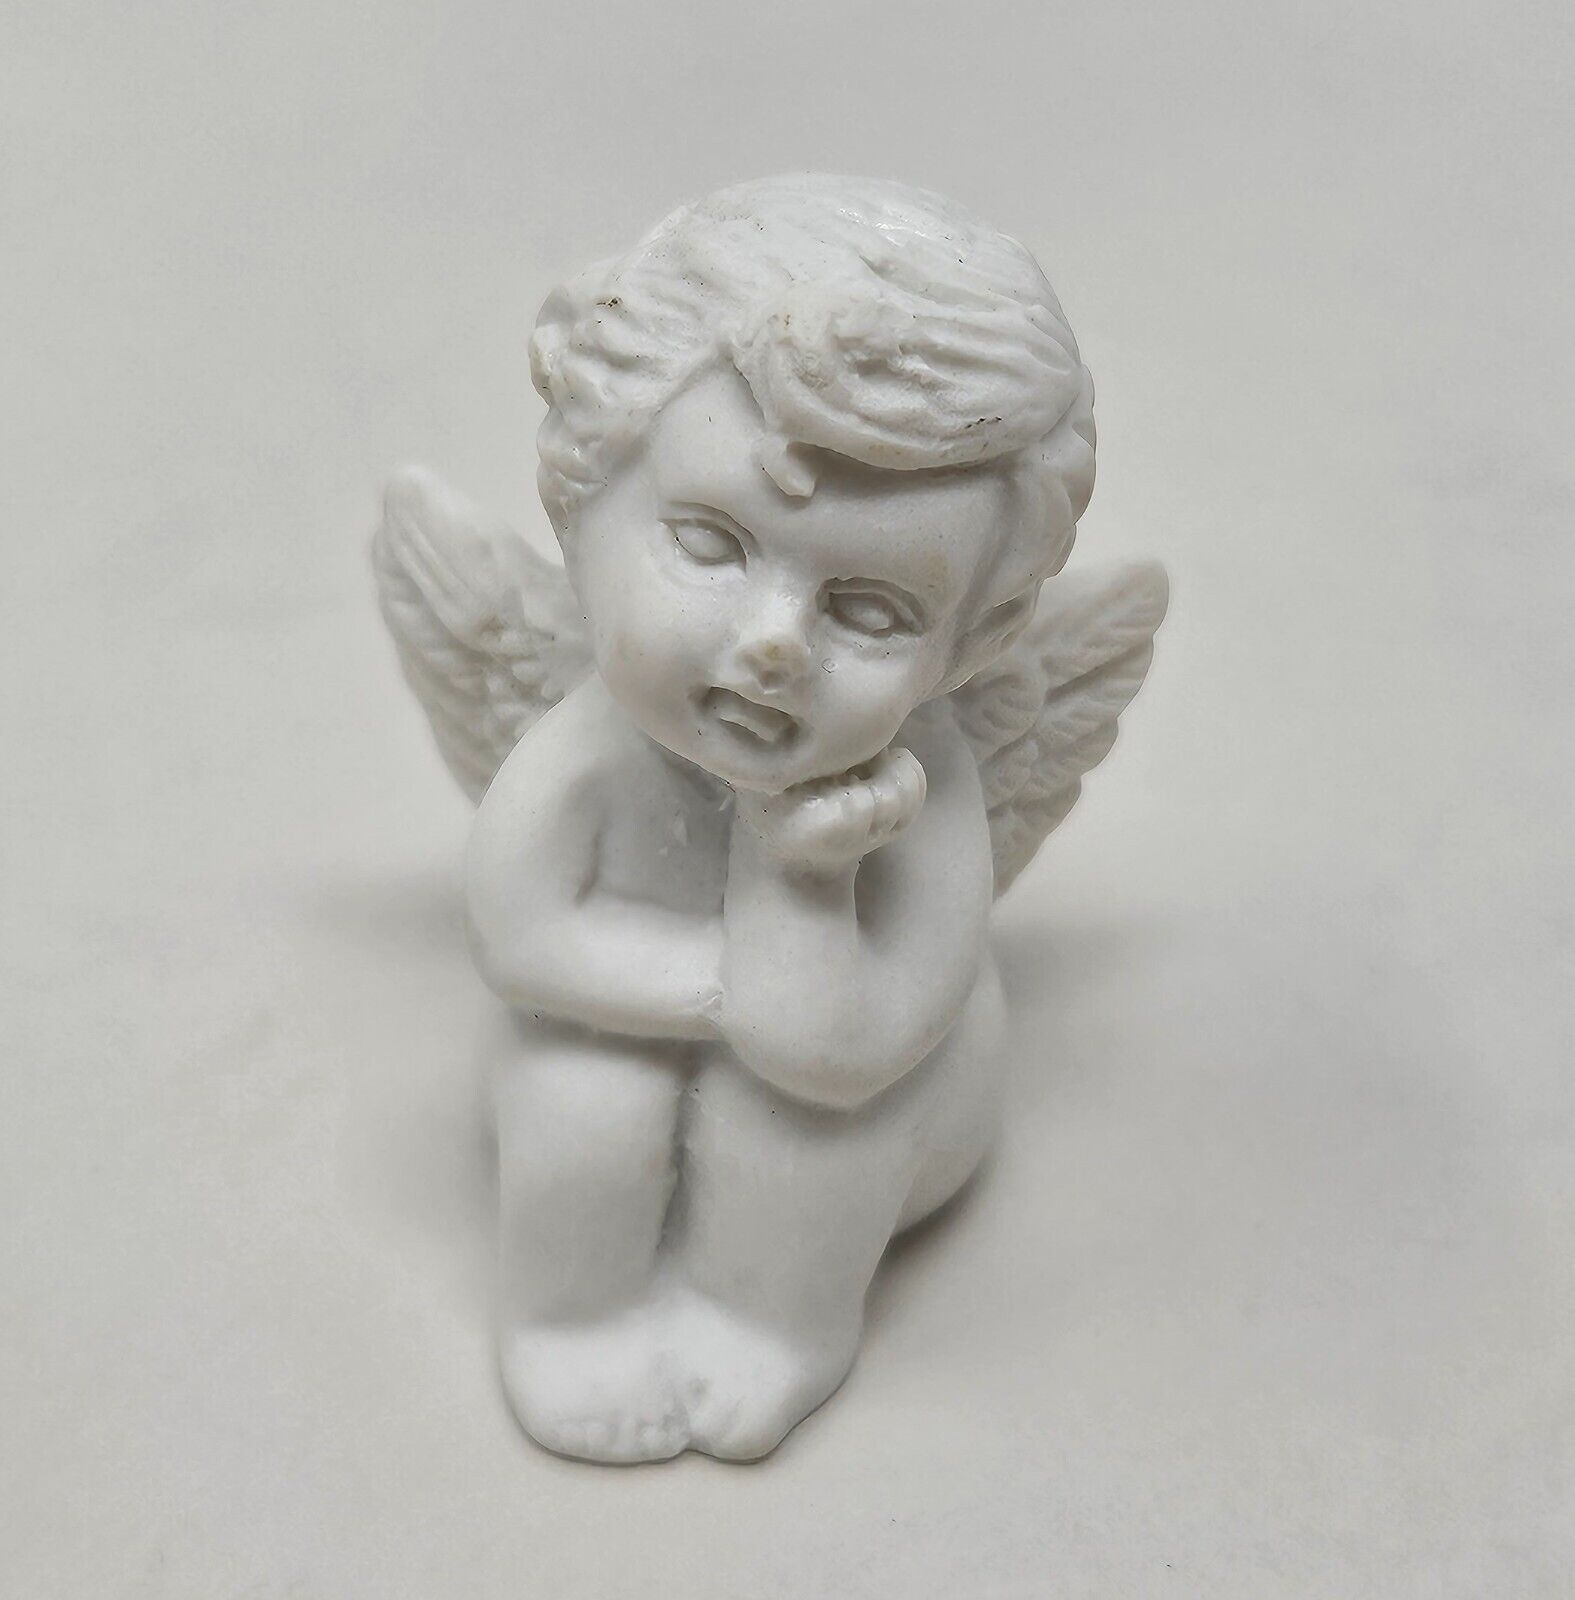 Lot of 6 VTG White Resin Miniature Cherub Angel Figure Statue Figurine Christmas